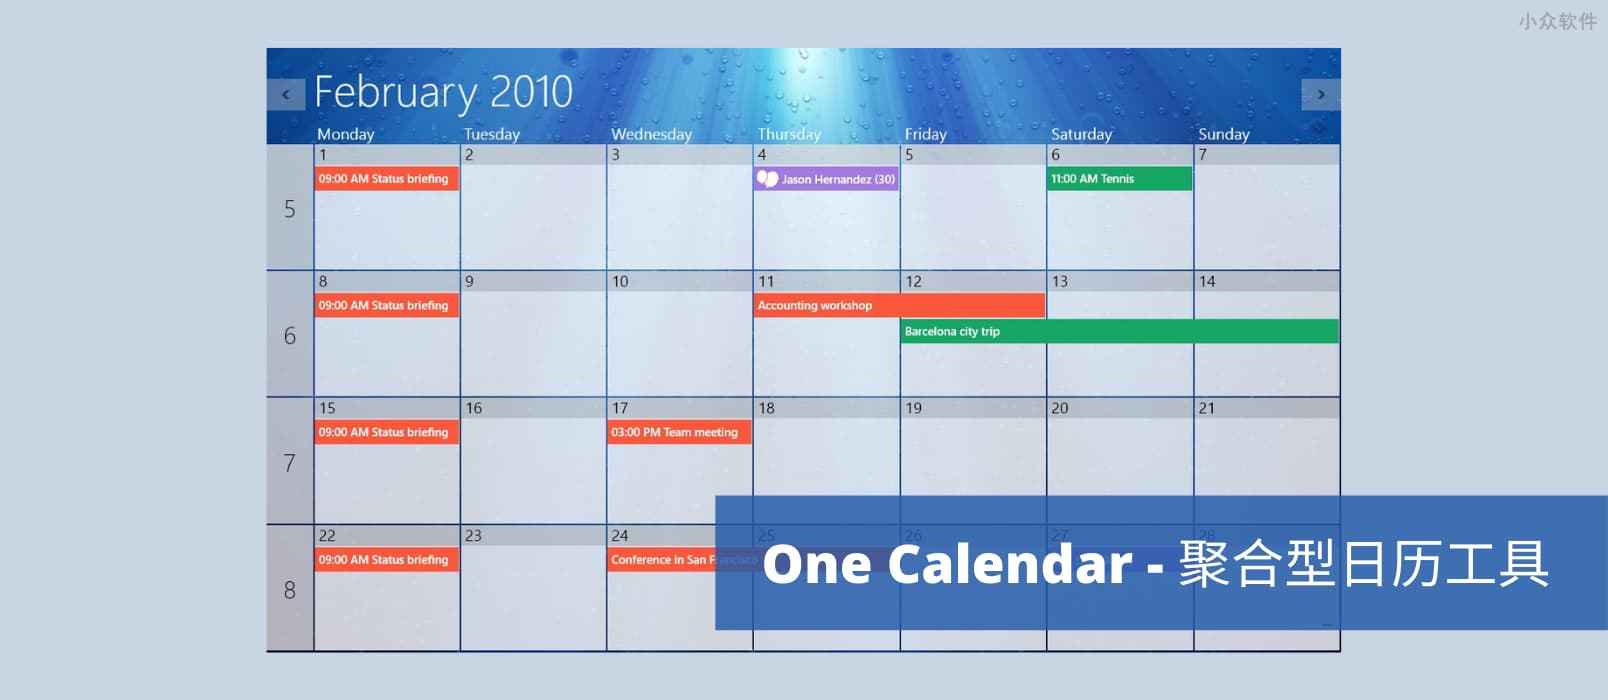 One Calenda‪r‬ - 支持 12 种日历账户，可显示任务的聚合型日历工具[Win/macOS/iPhone/Android]